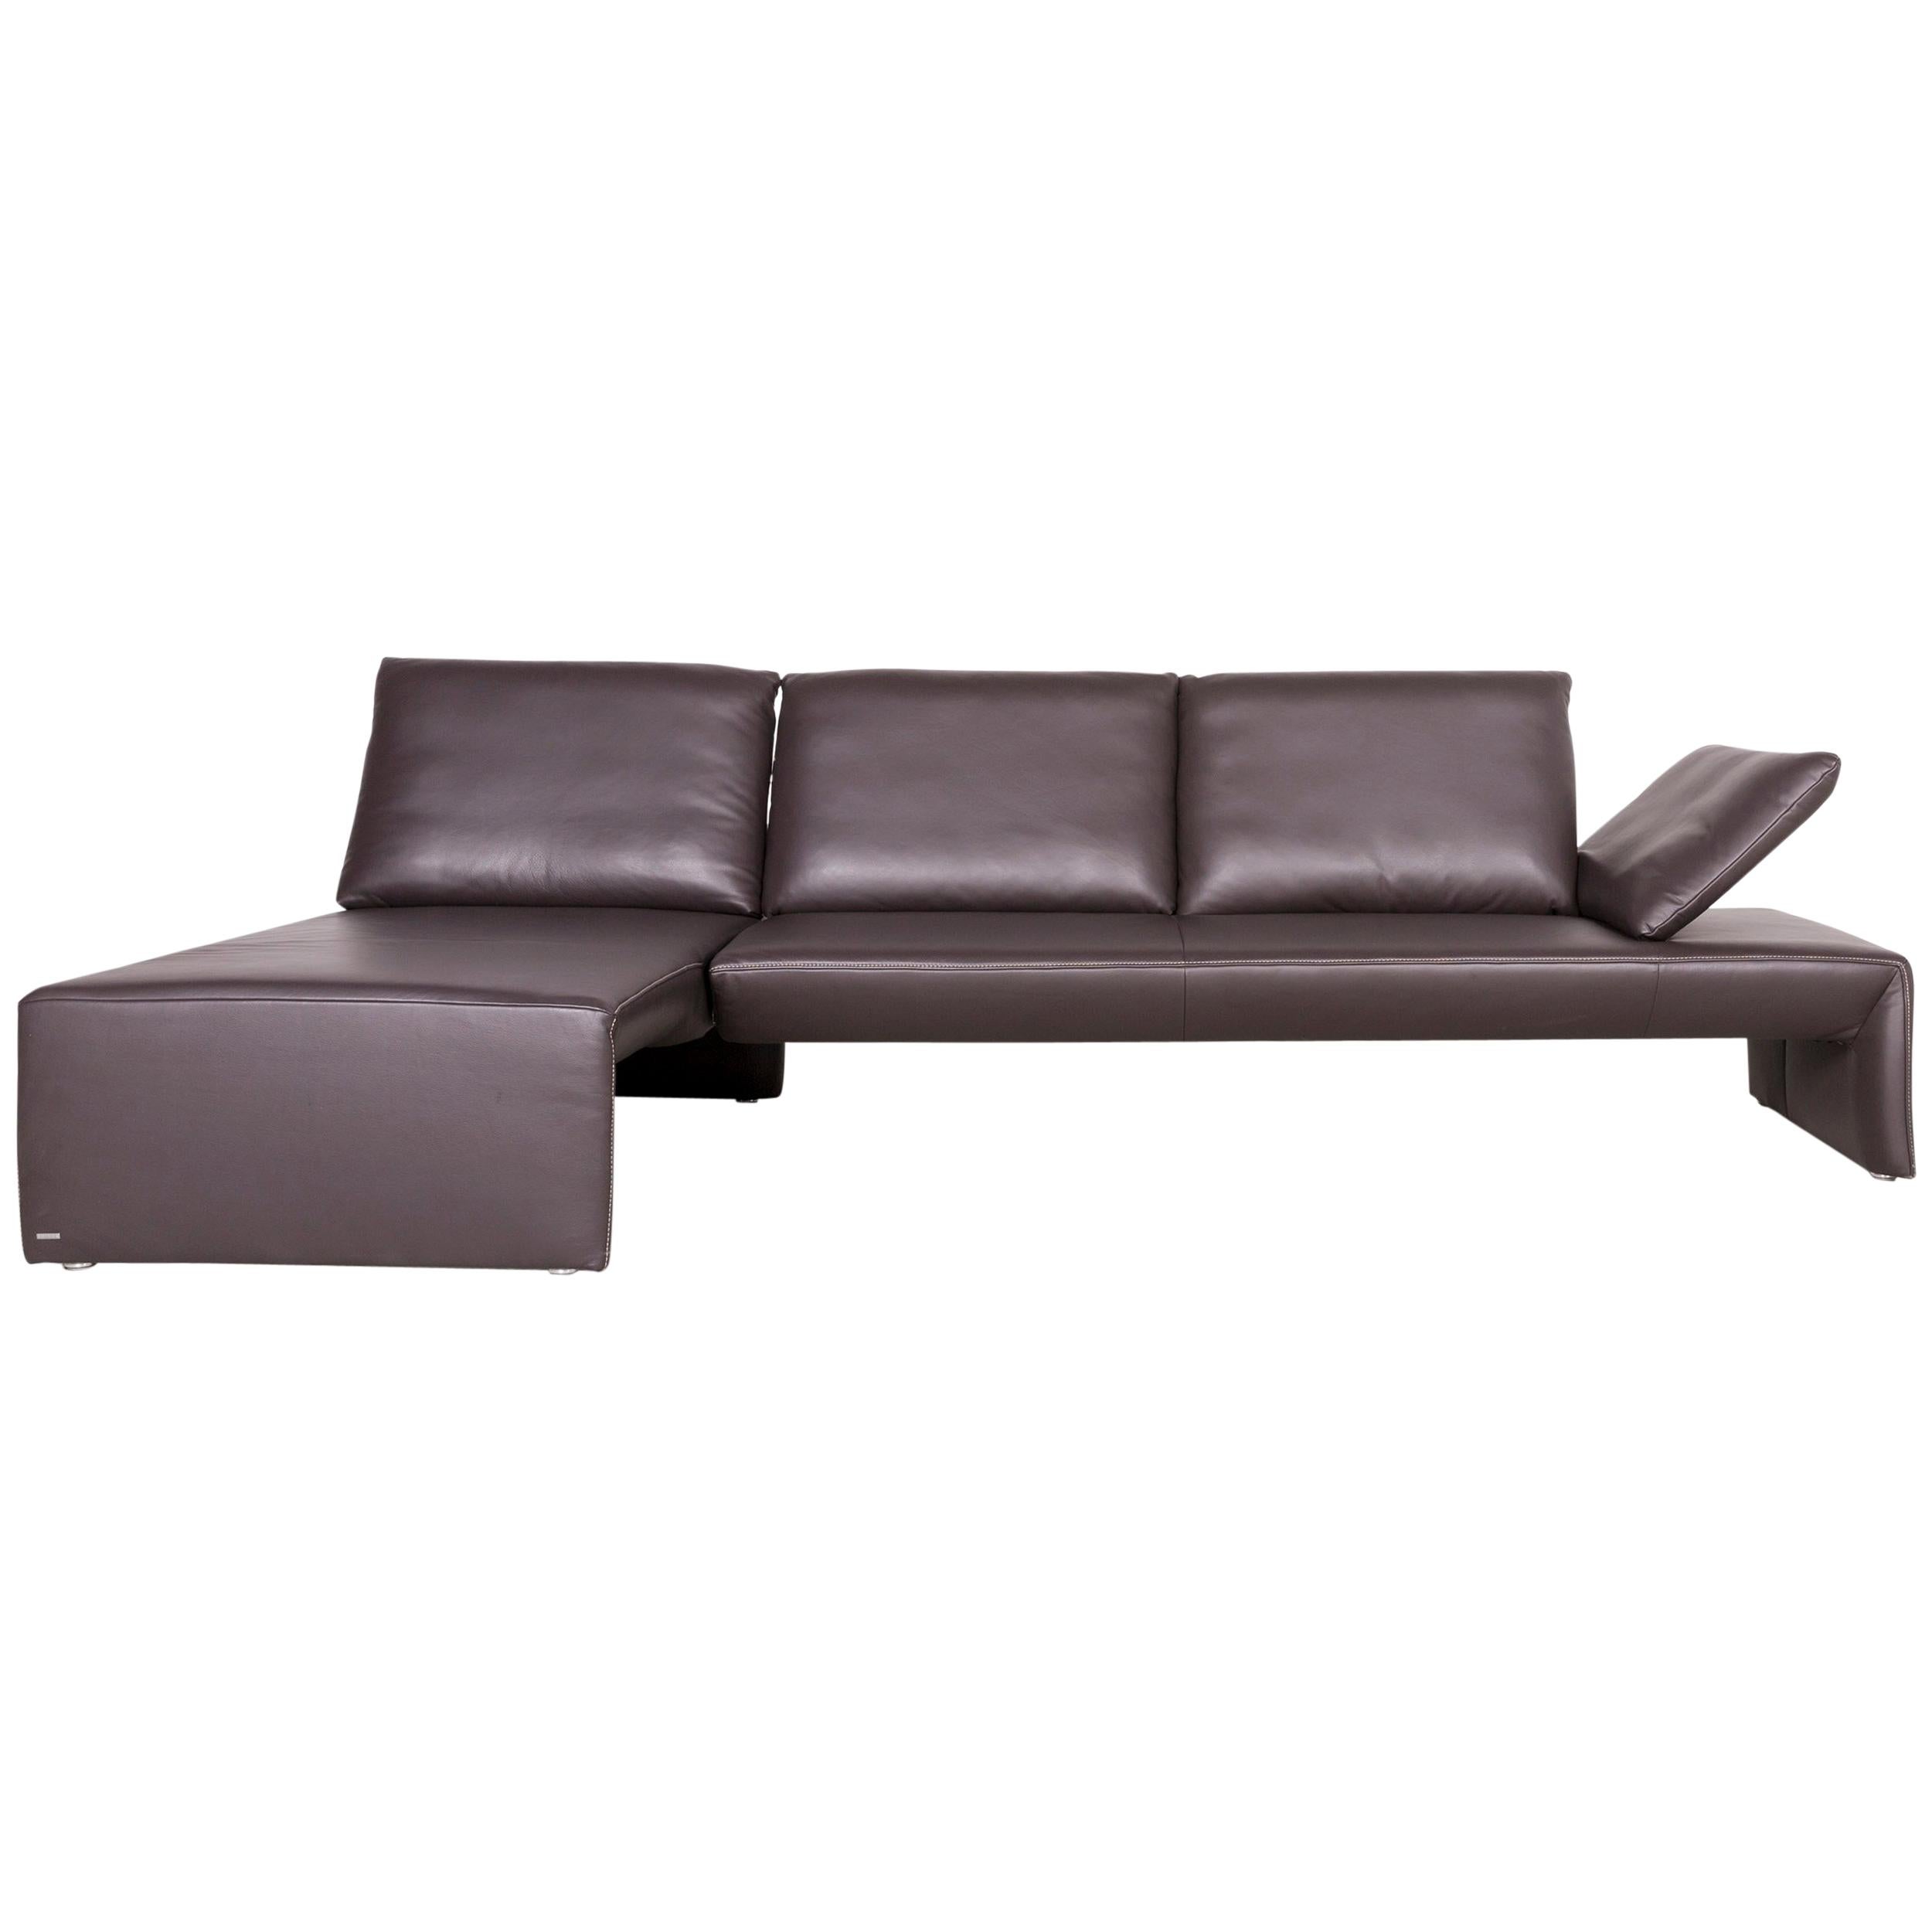 Koinor Rivo Designer Leather Corner Sofa Brown Couch For Sale